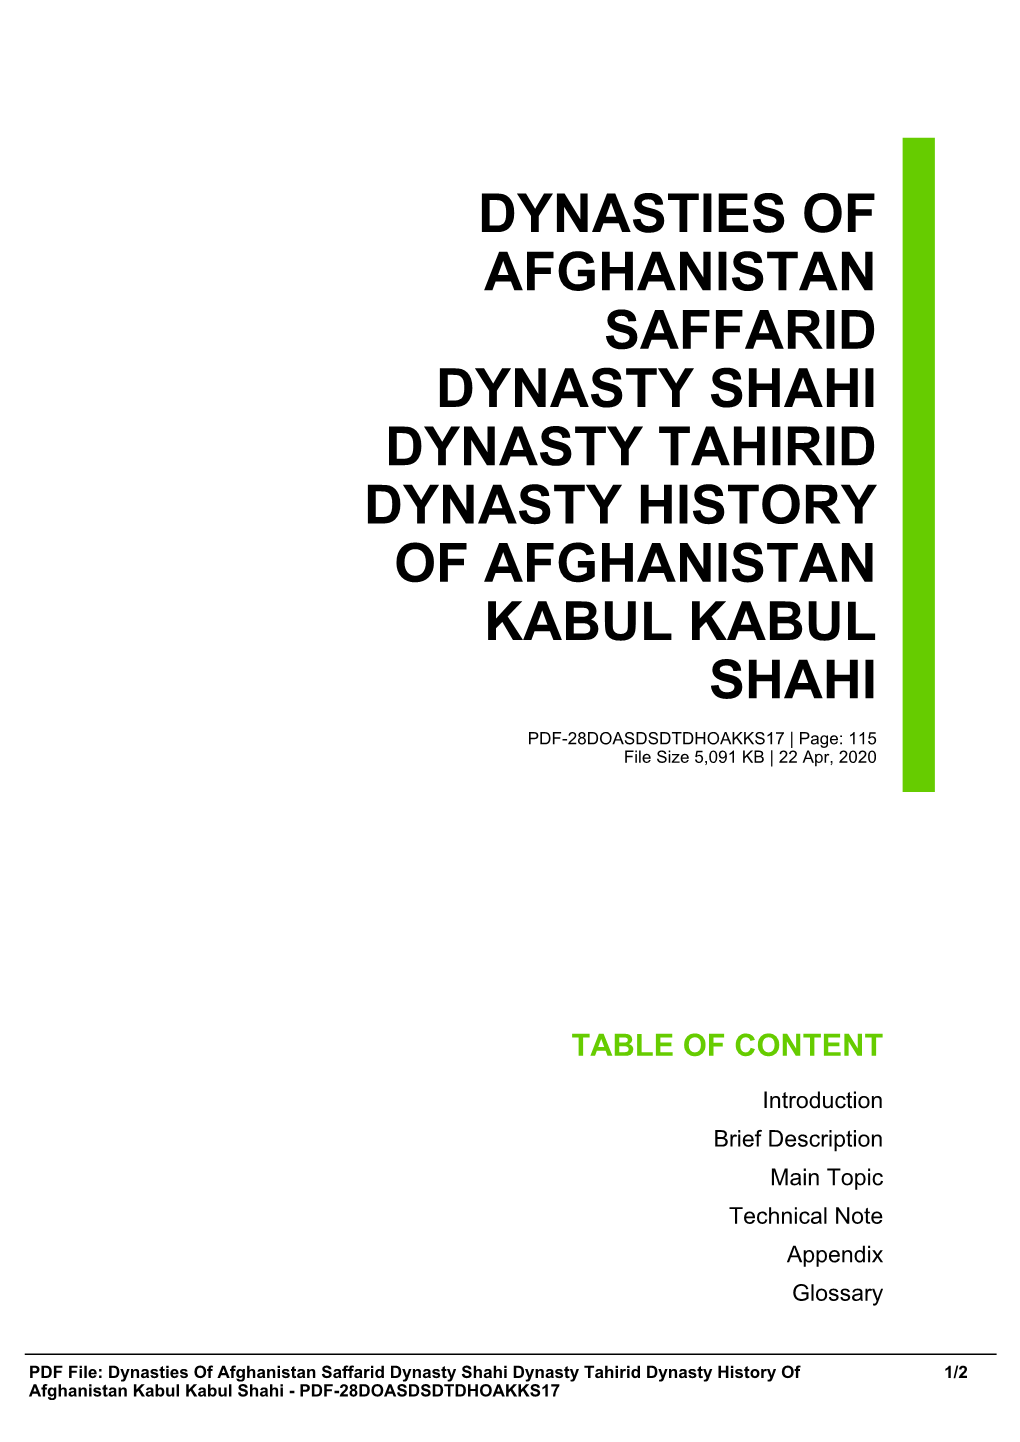 Dynasties of Afghanistan Saffarid Dynasty Shahi Dynasty Tahirid Dynasty History of Afghanistan Kabul Kabul Shahi